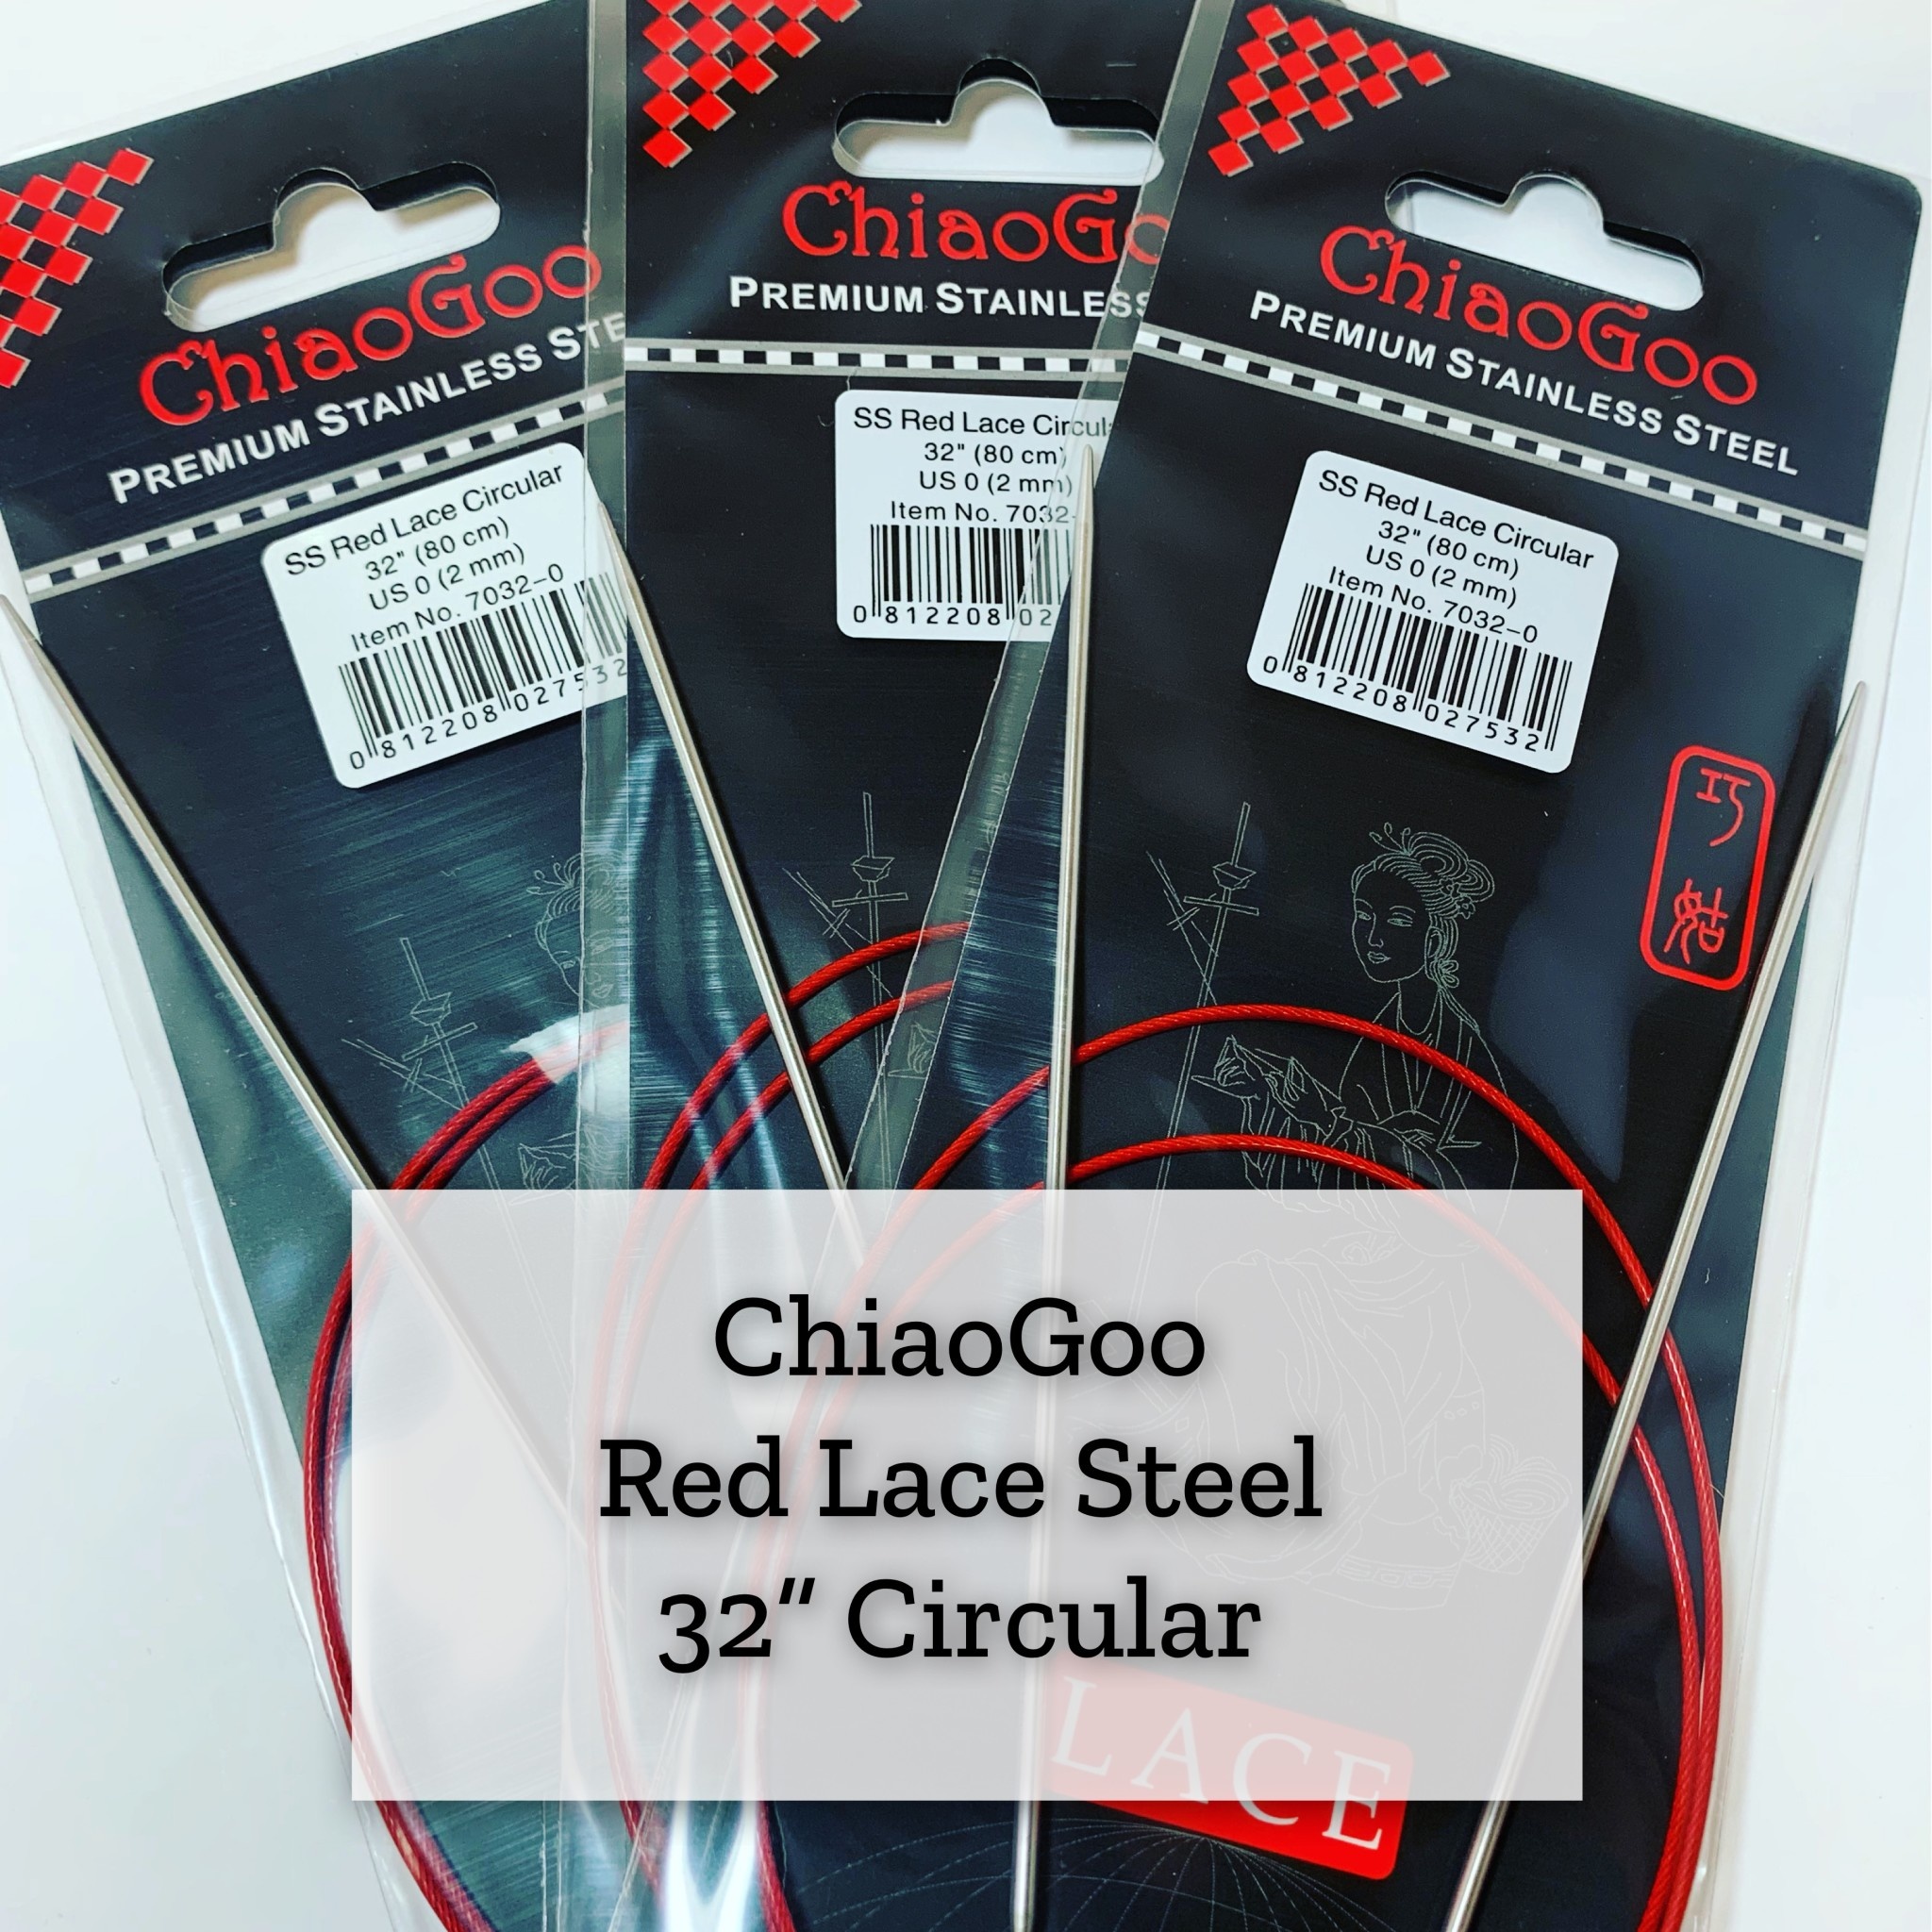 ChiaoGoo Red Lace Steel - 32" 2.75 mm